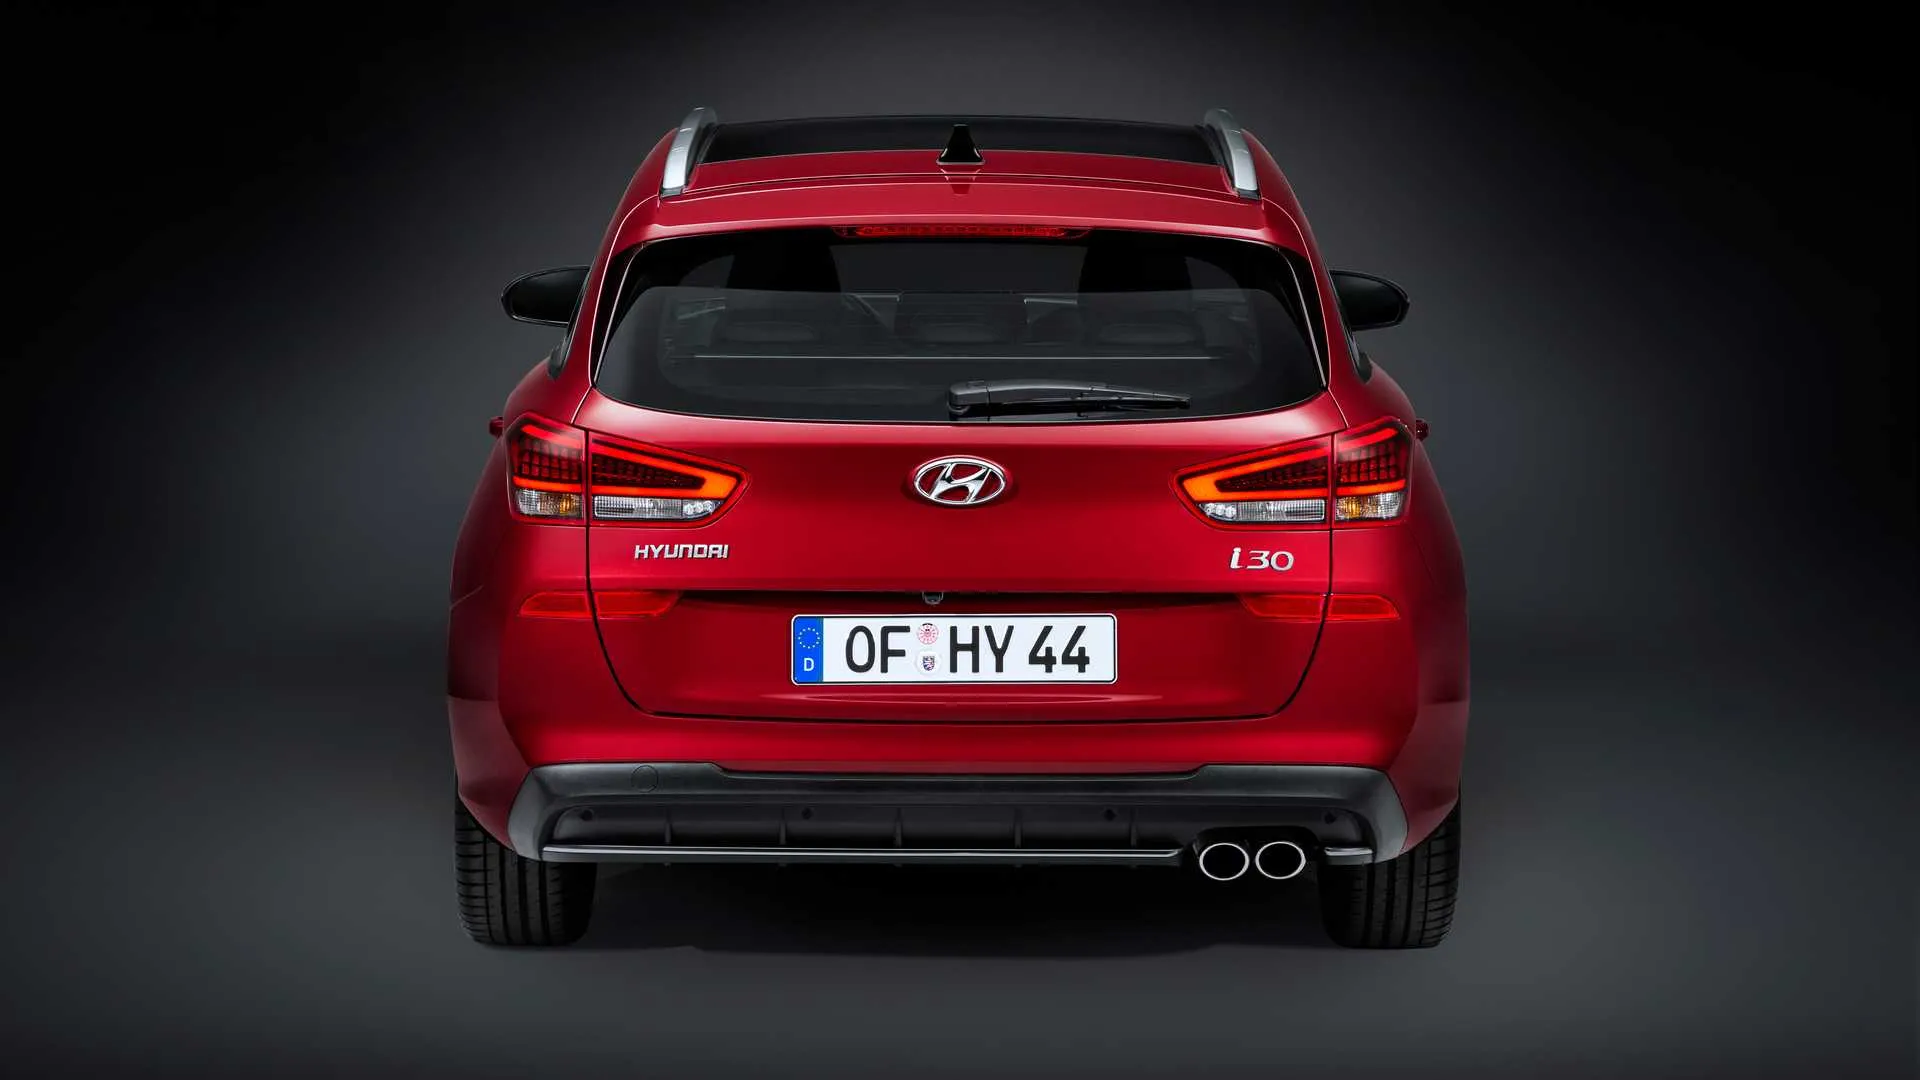 Renting Hyundai i30: oferta de renting del Hyundai i30 para particulares, autónomos y empresas. Renting Hyundai i30 barato